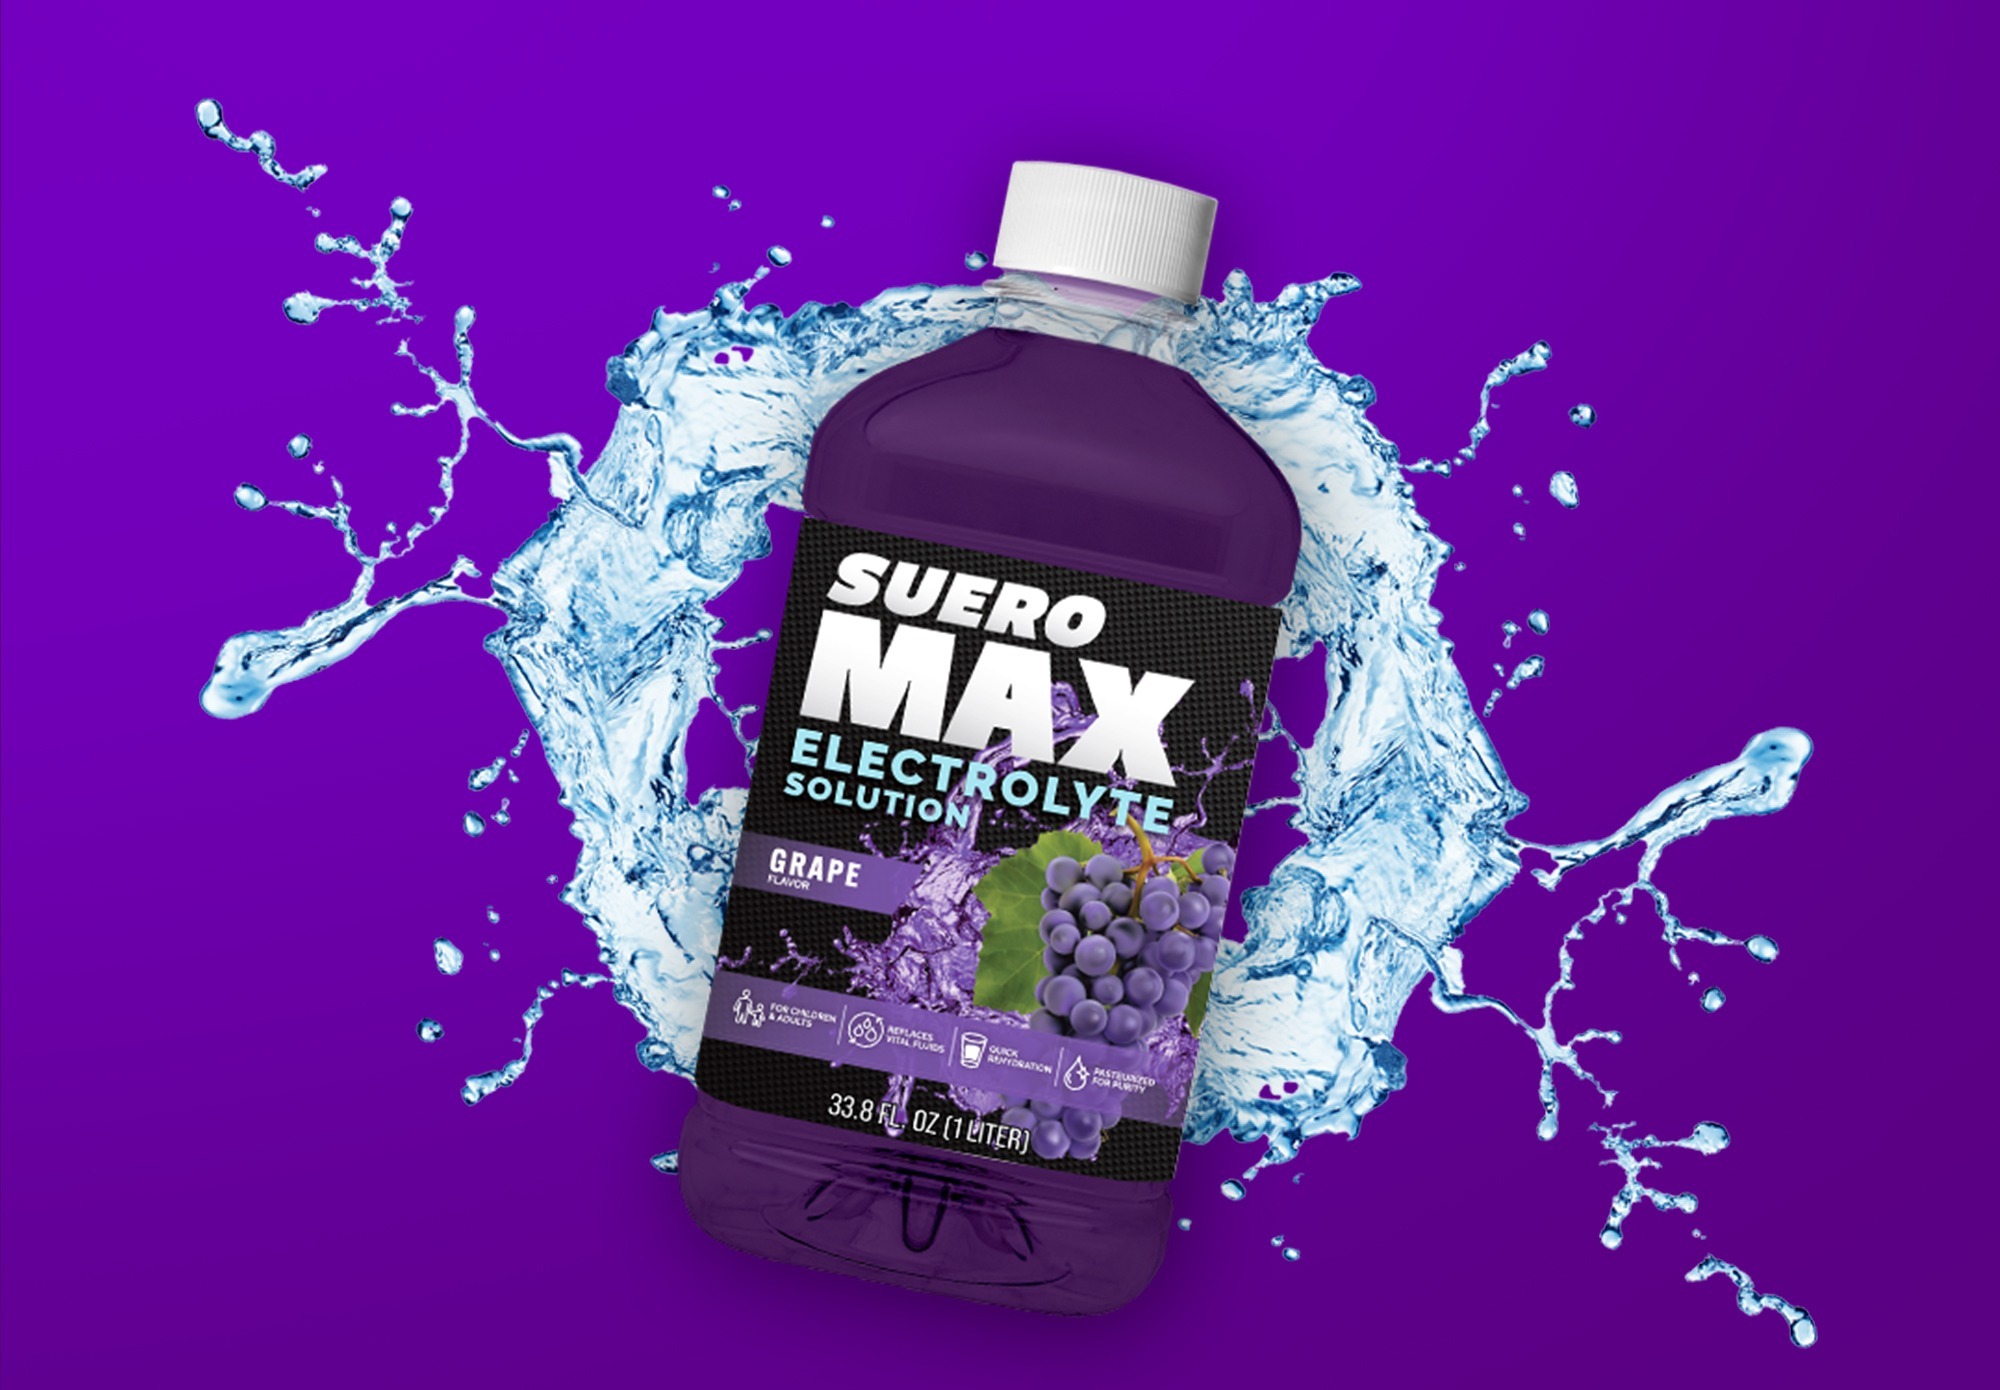 Suero Max Grape Flavor Packaging Design by Octane Advertising Design.